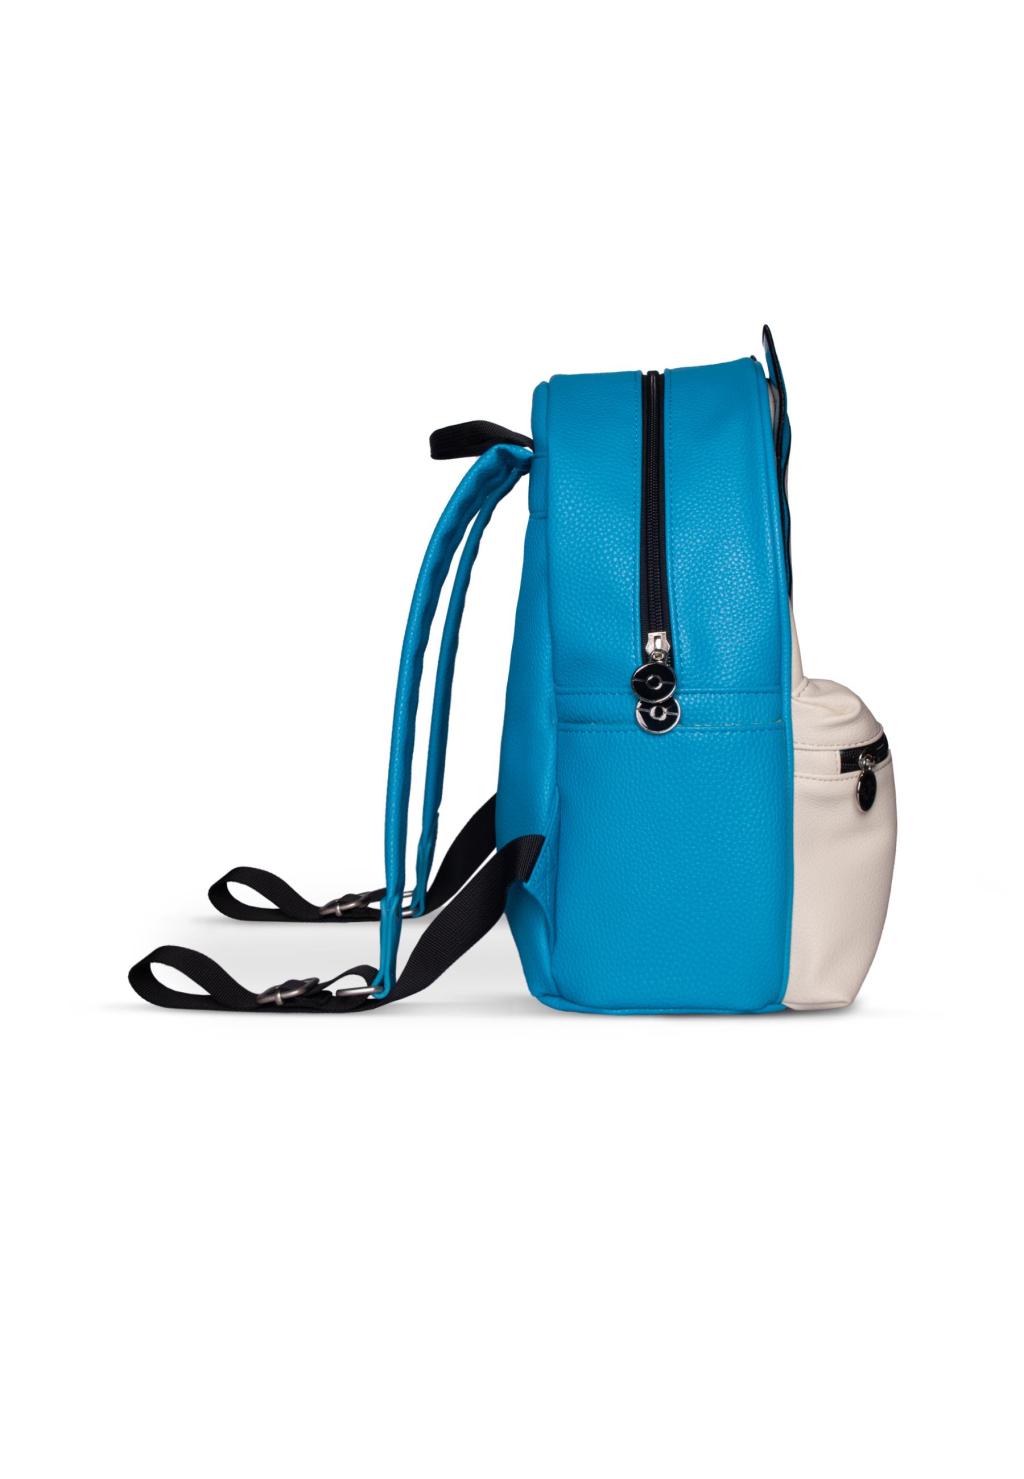 POKEMON - Snorlax - Heady - Backpack Novelty '26x20x12cm'